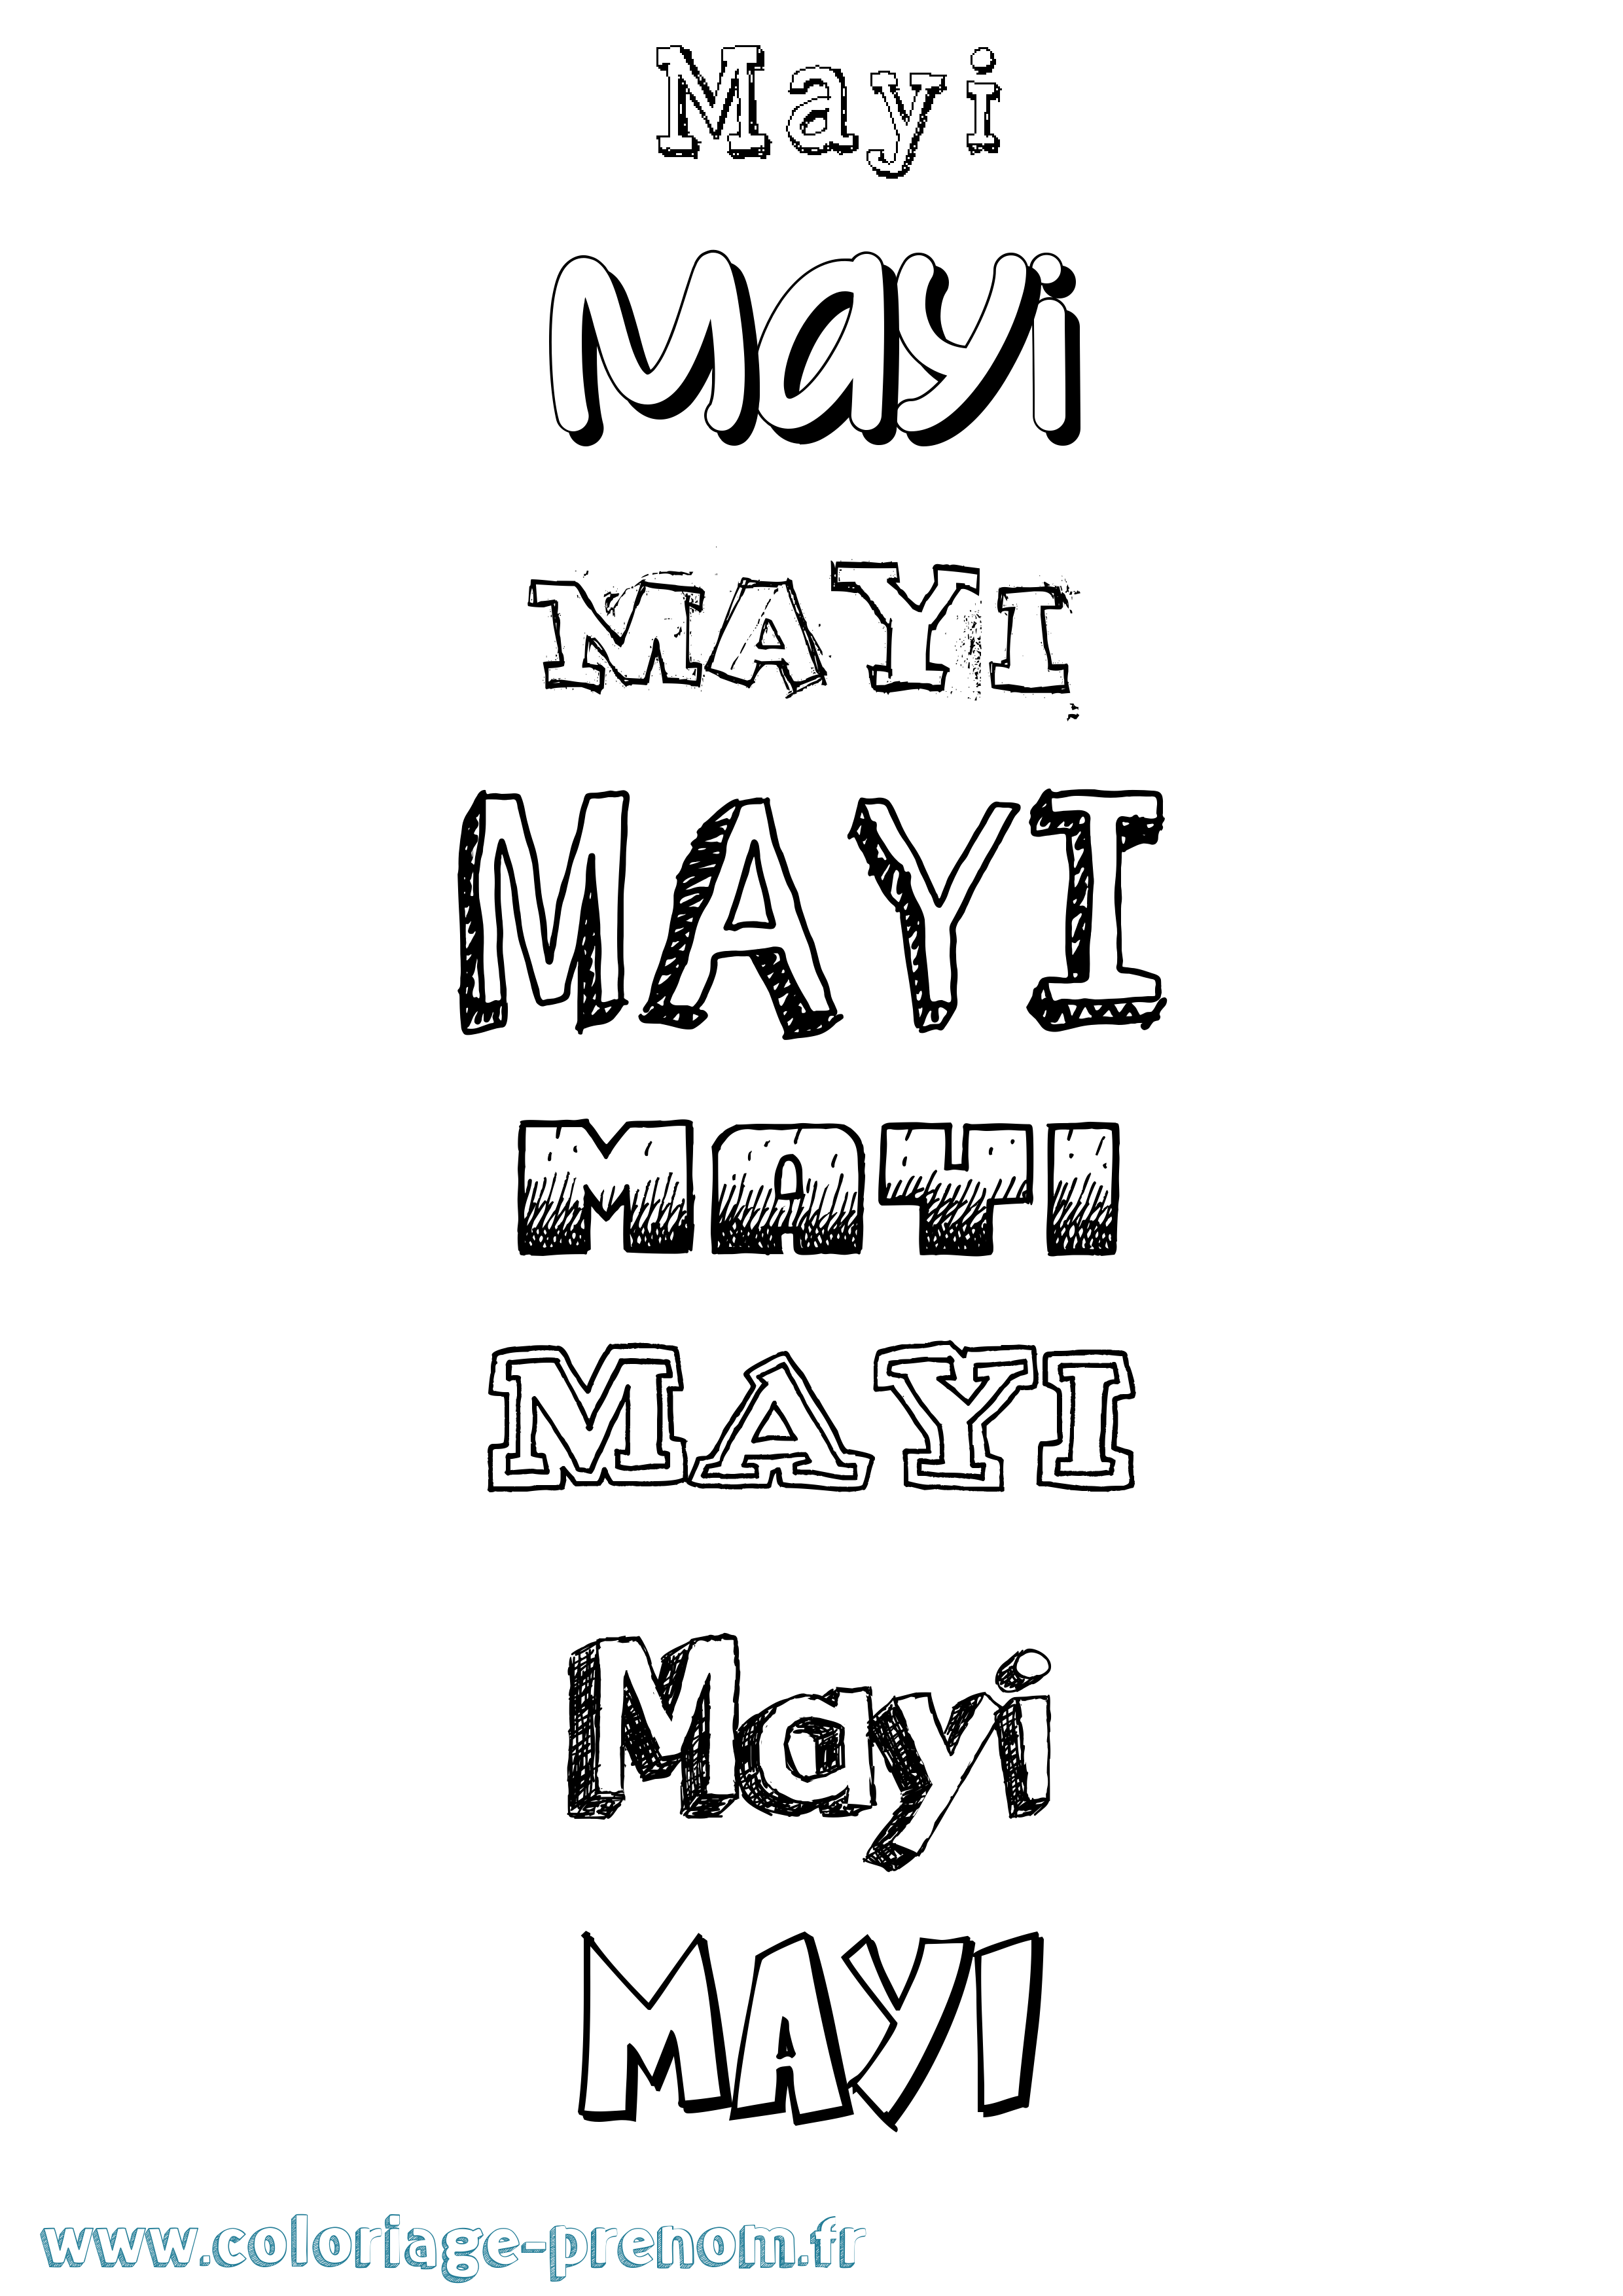 Coloriage prénom Mayi Dessiné